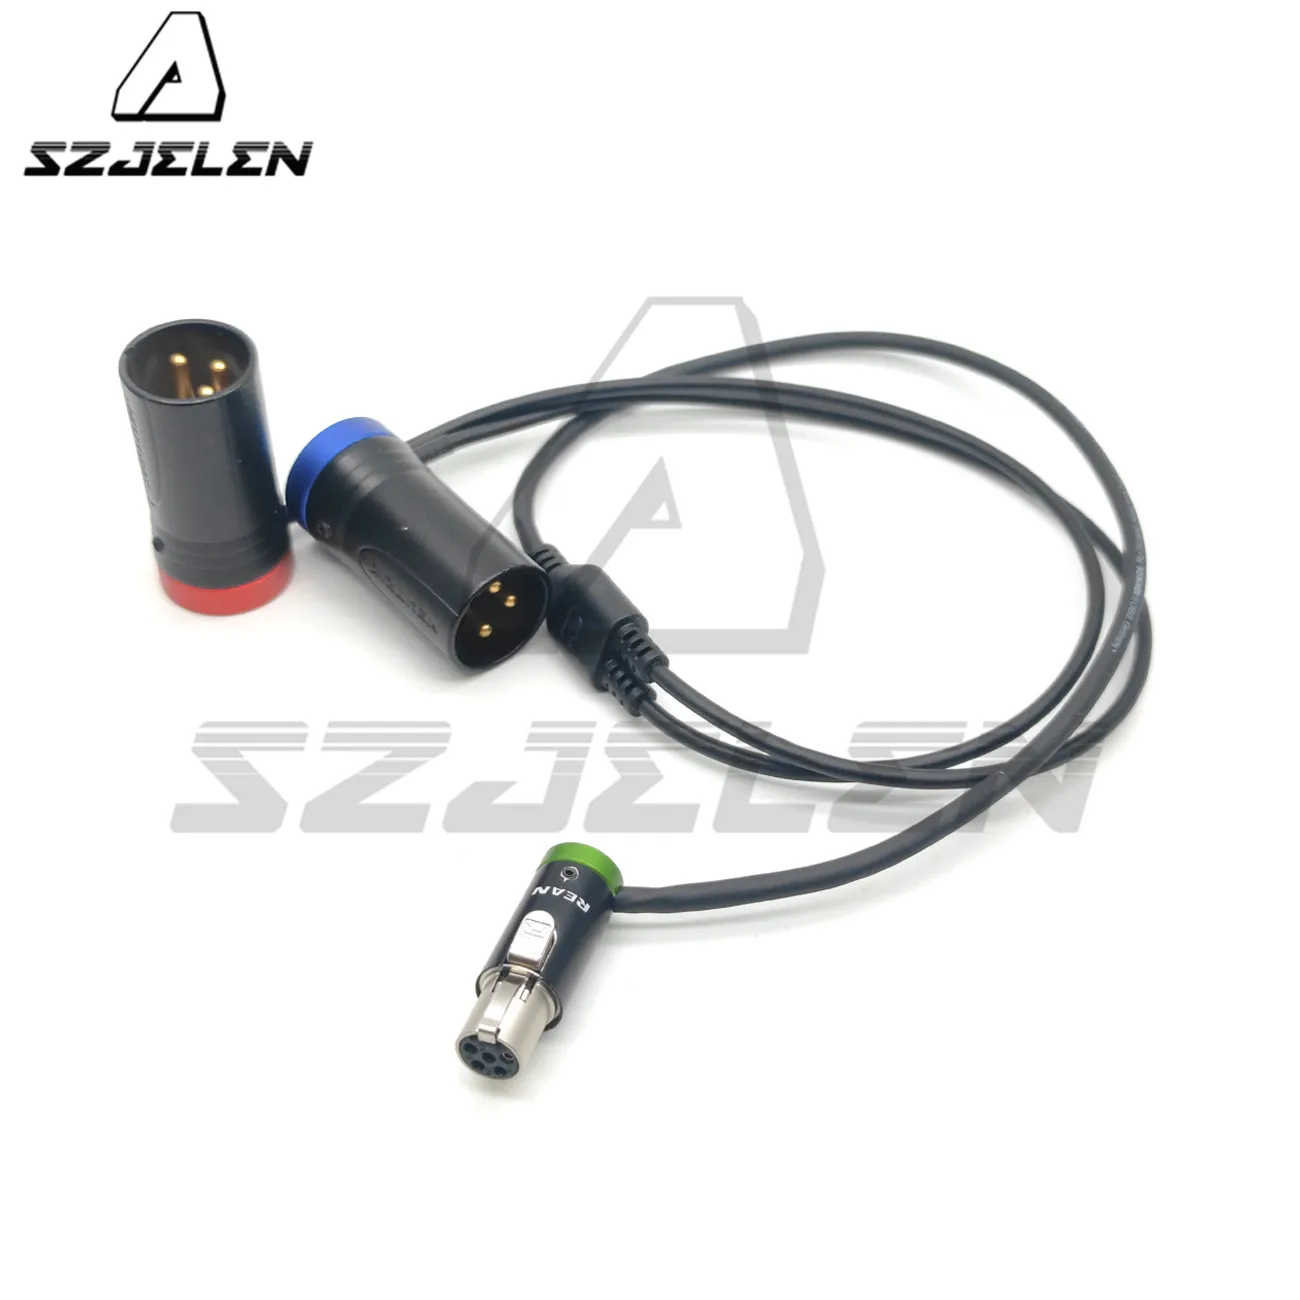 Low-profile ta5f mini XLR 5-pin female to two low-profile XLR NEUTRIK 3-pin XLR male connectors for Zaxcom qrx200 audio cables